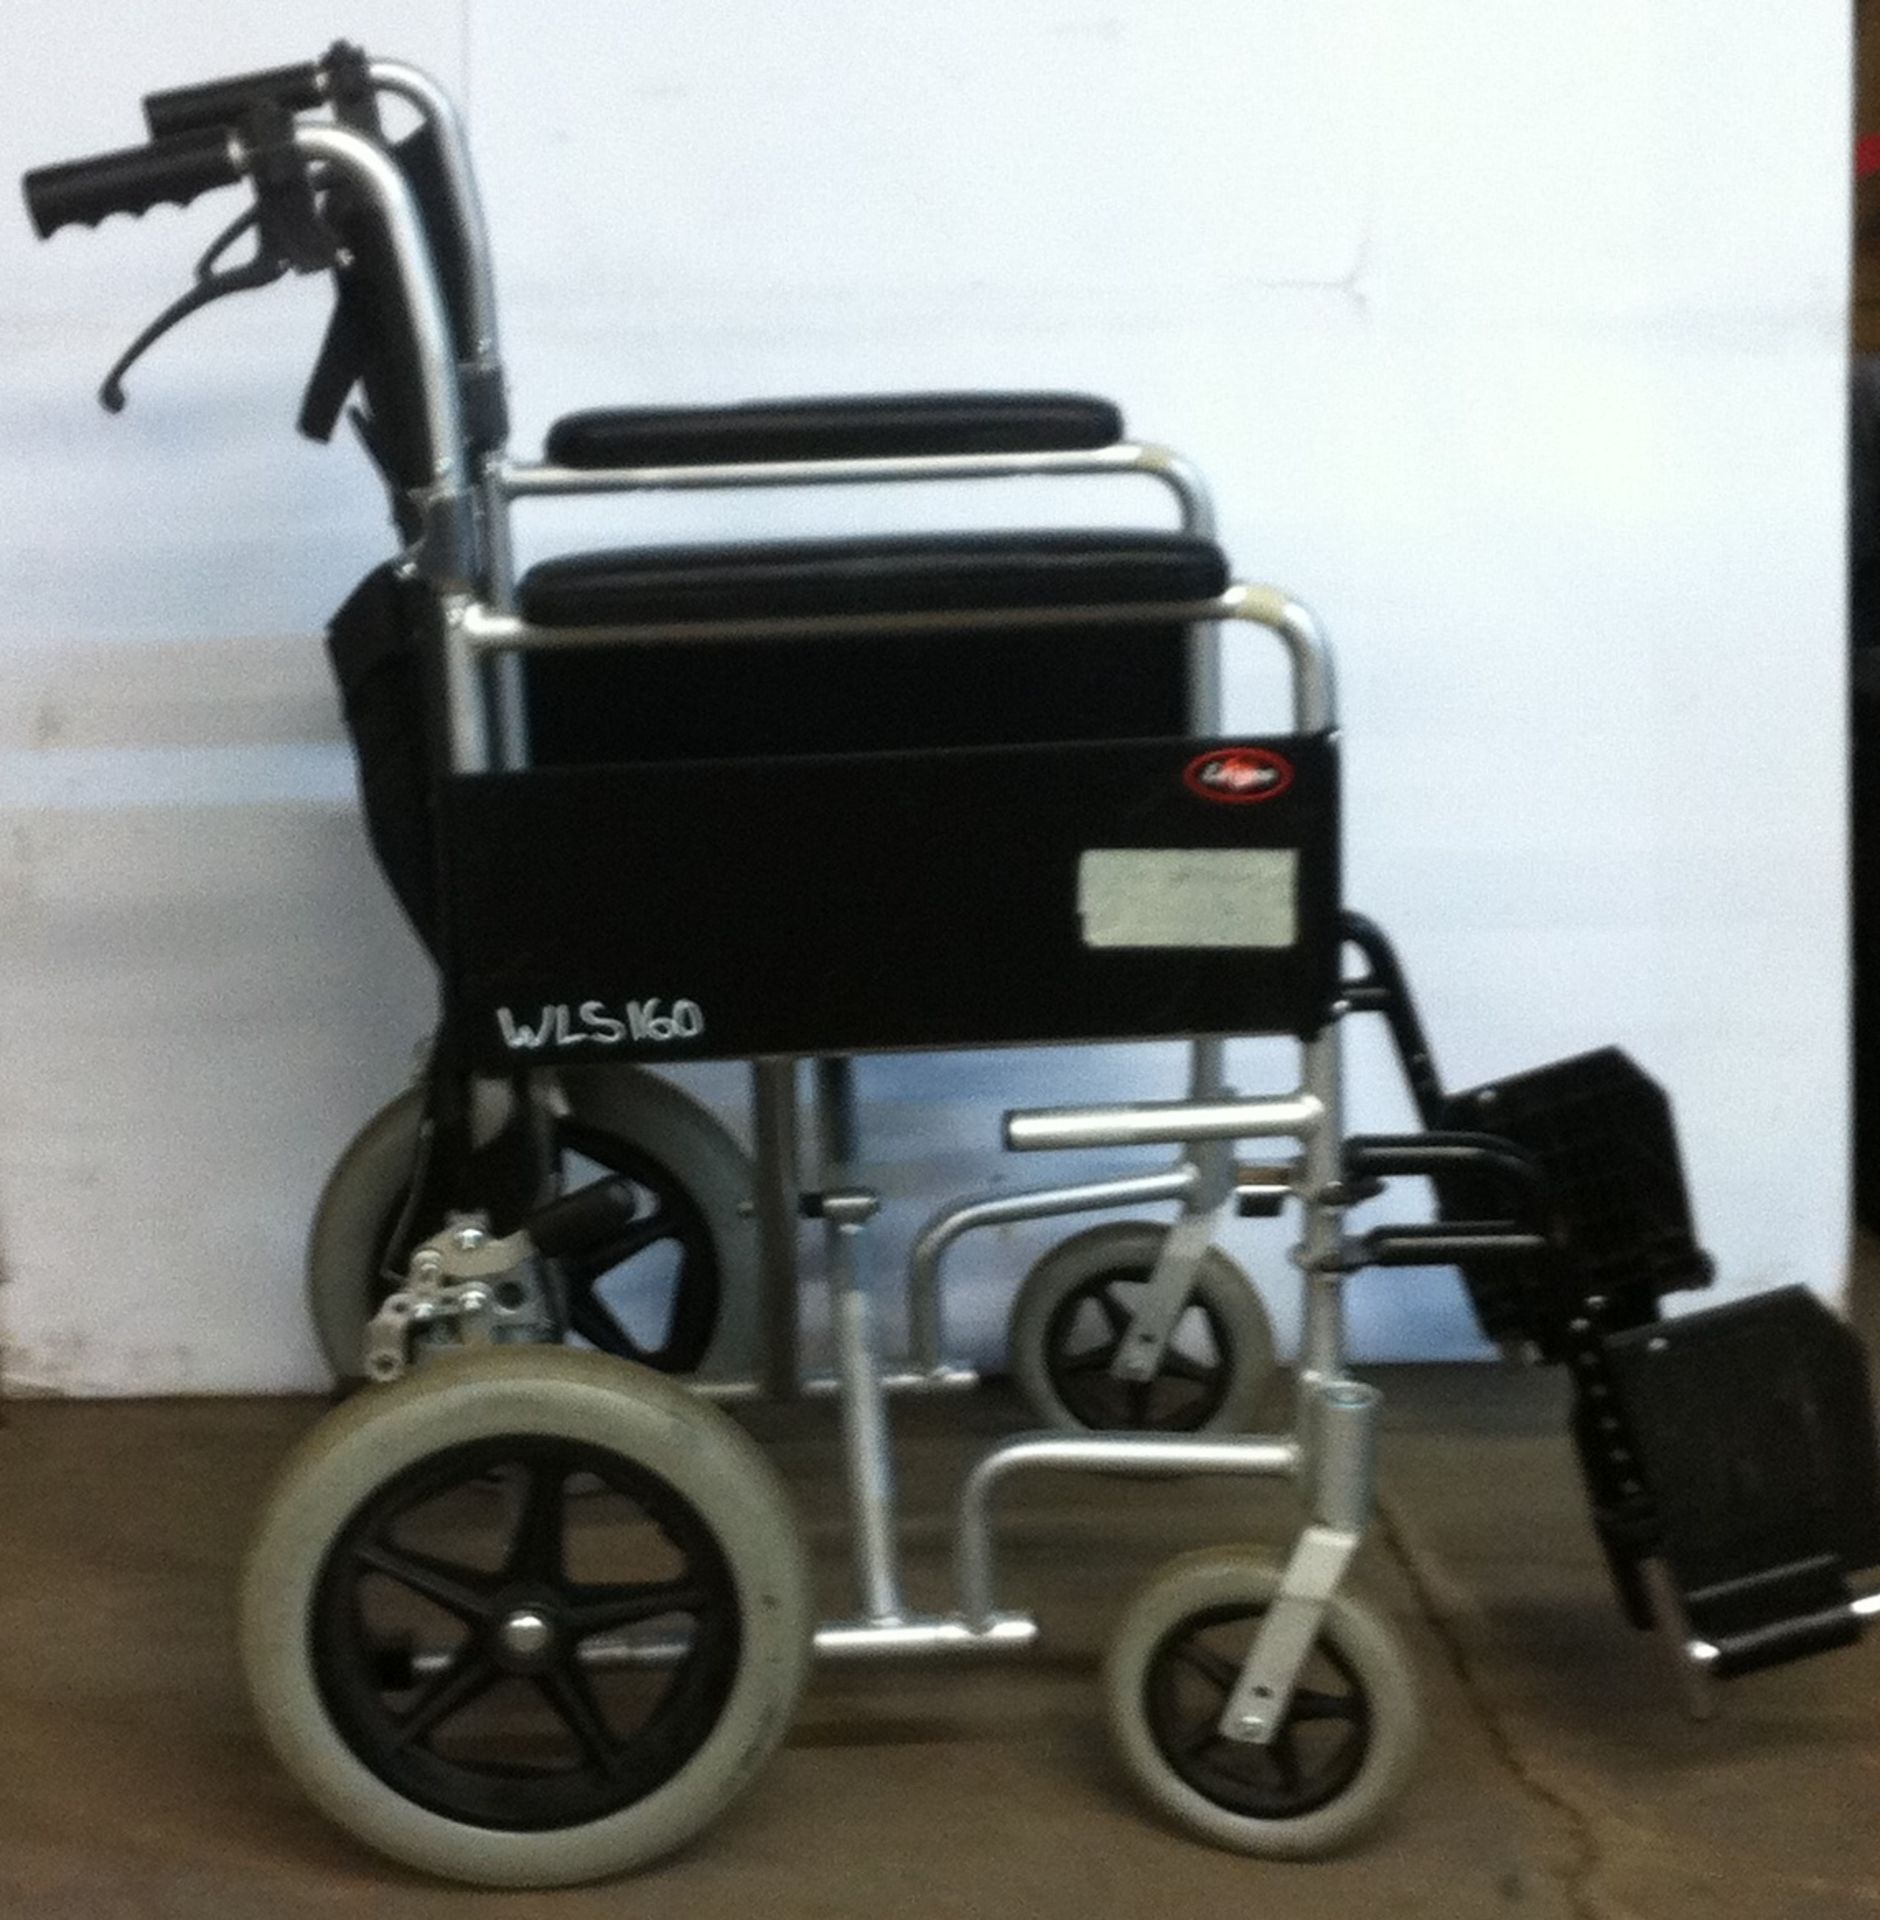 5 Wheelchairs - As per Description - Image 12 of 12